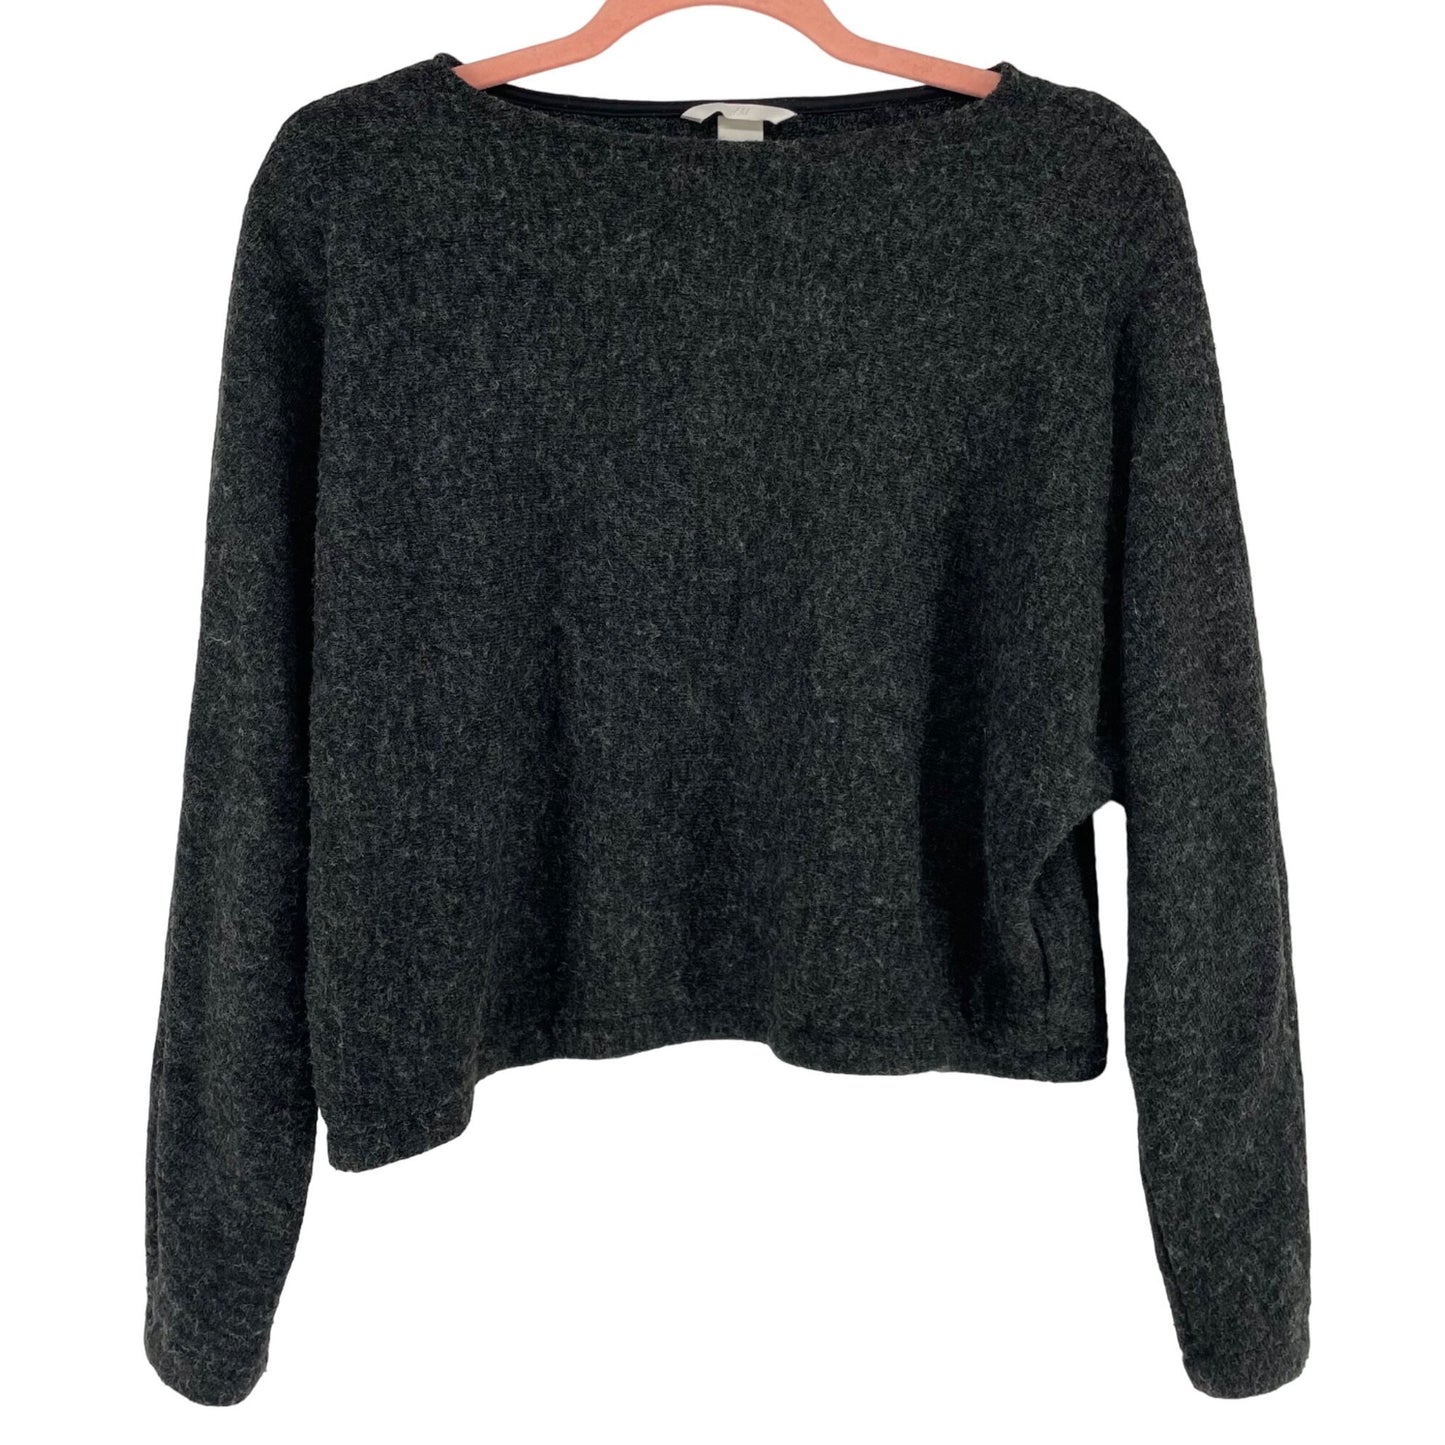 H&M Women's Size XS Grey Sweater